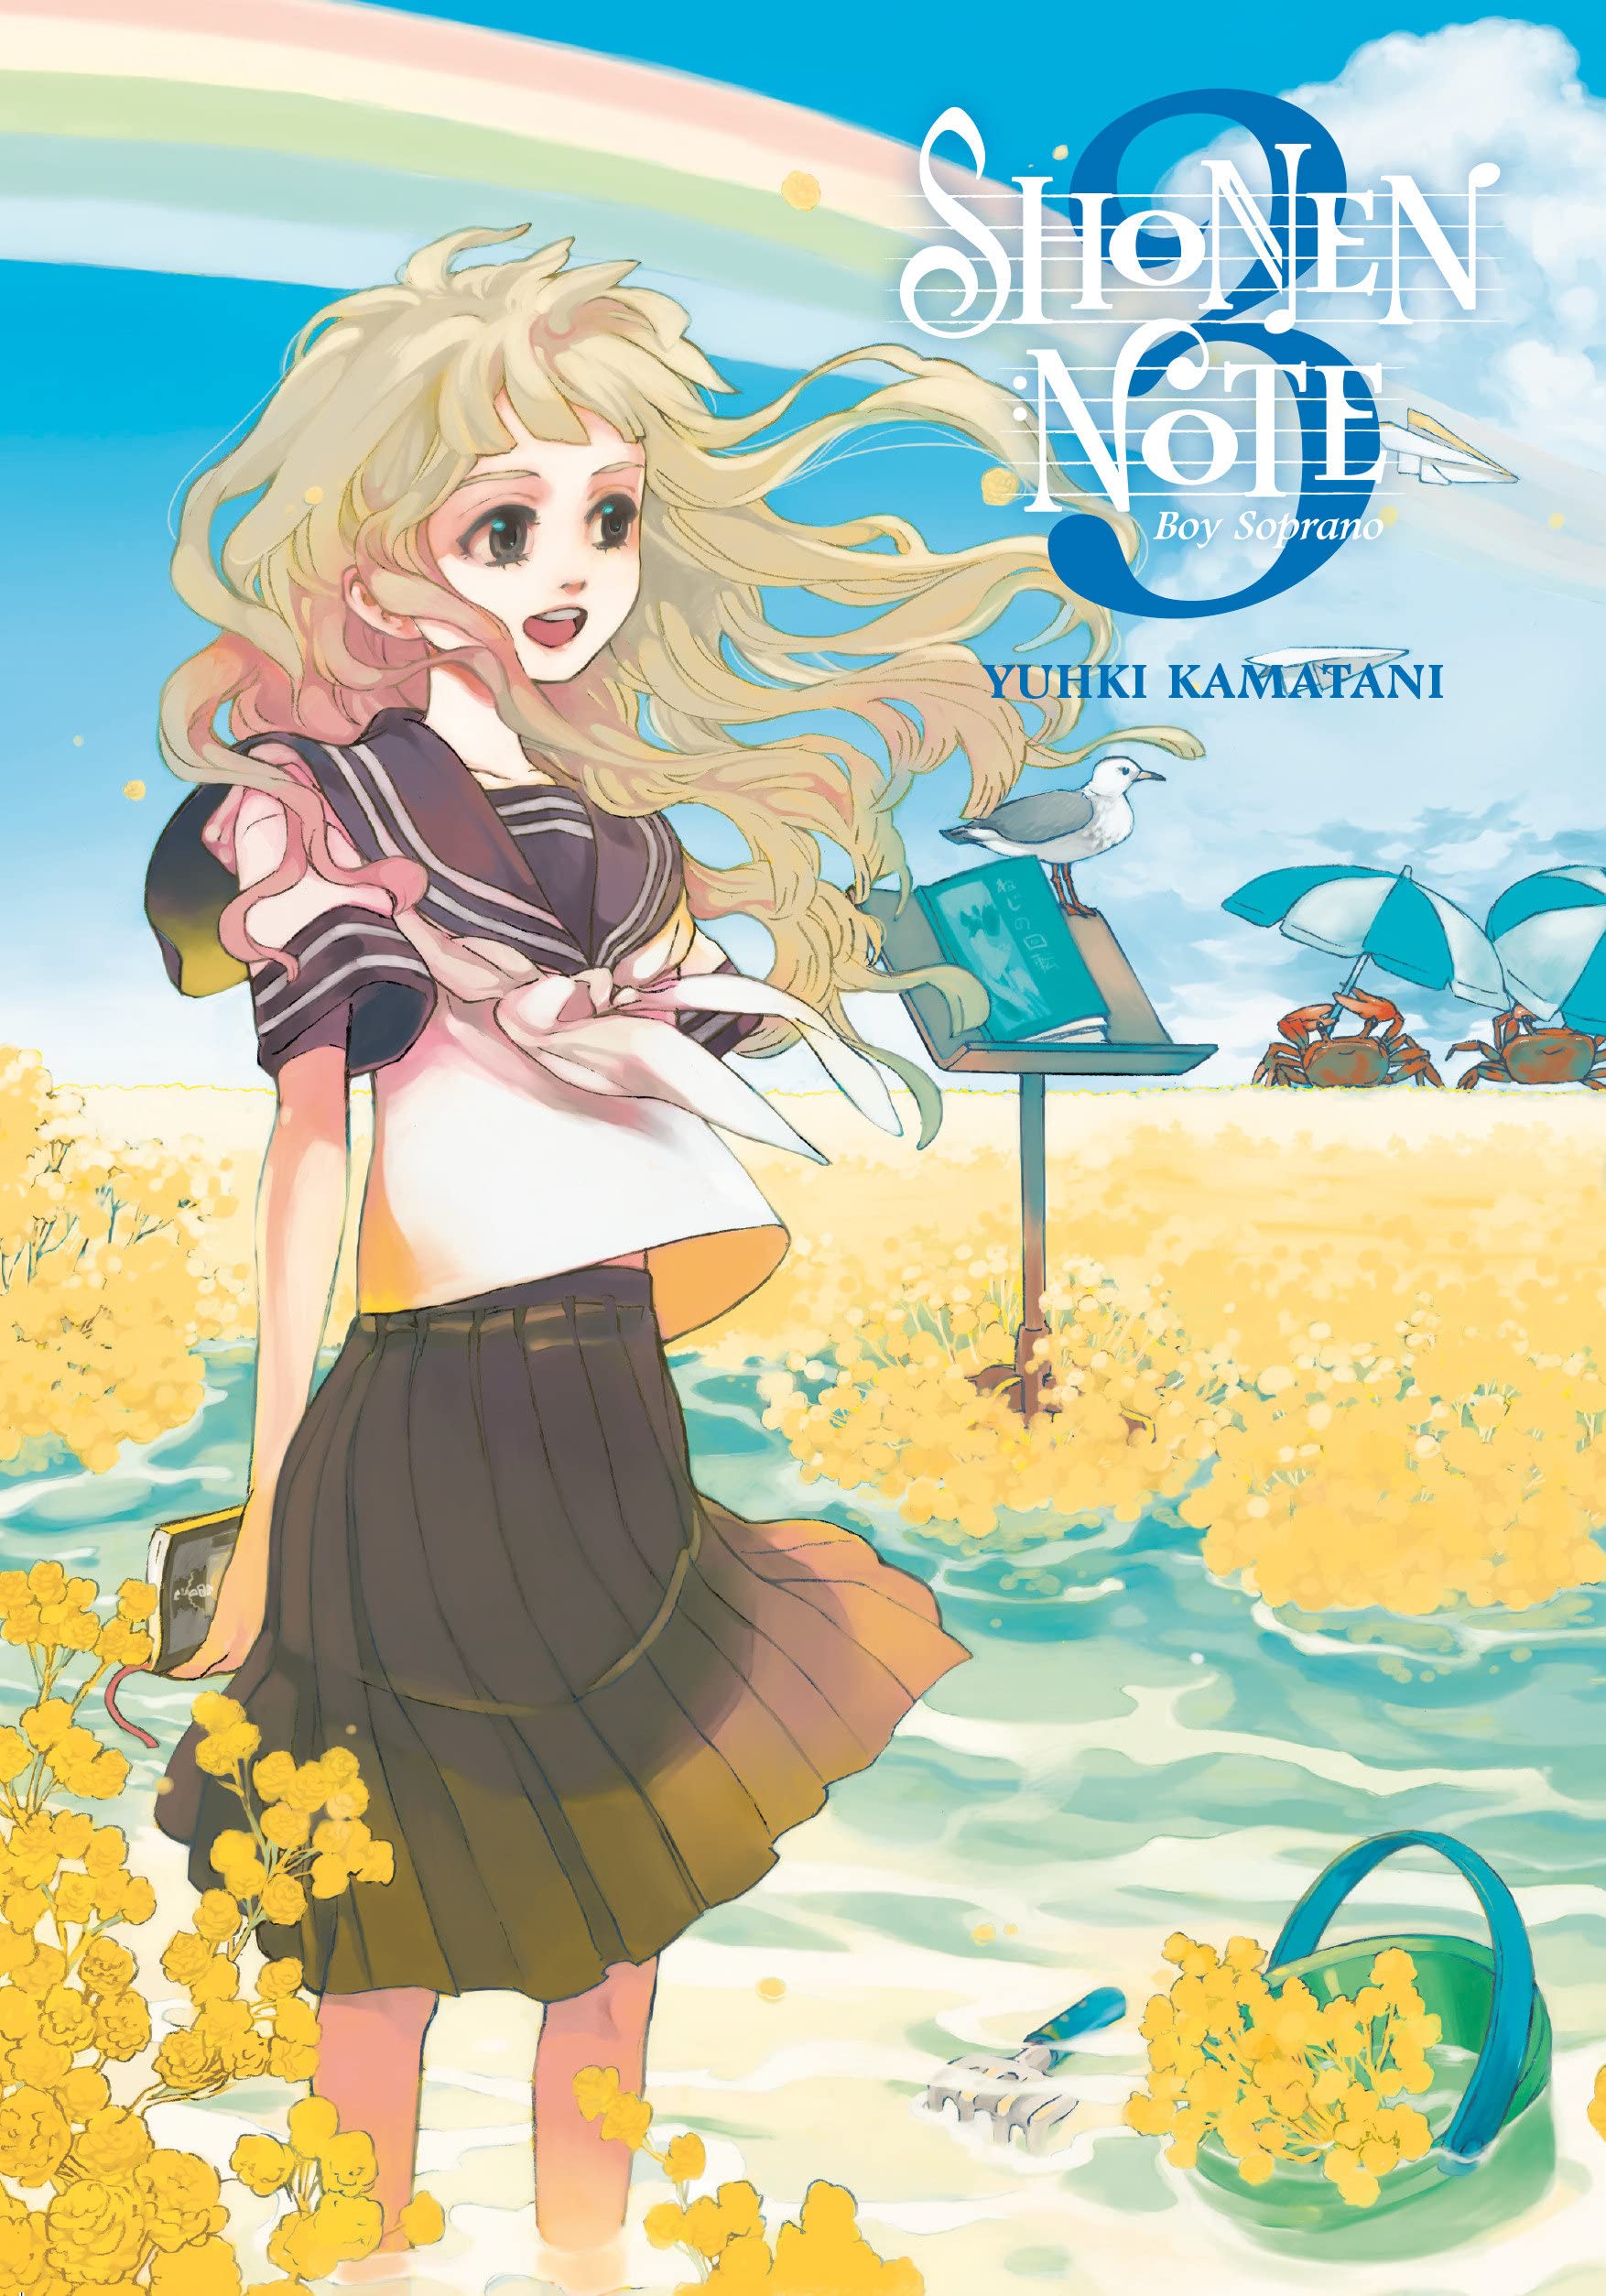 Shonen Note: Boy Soprano - Volume 3 | Yuhki Kamatani